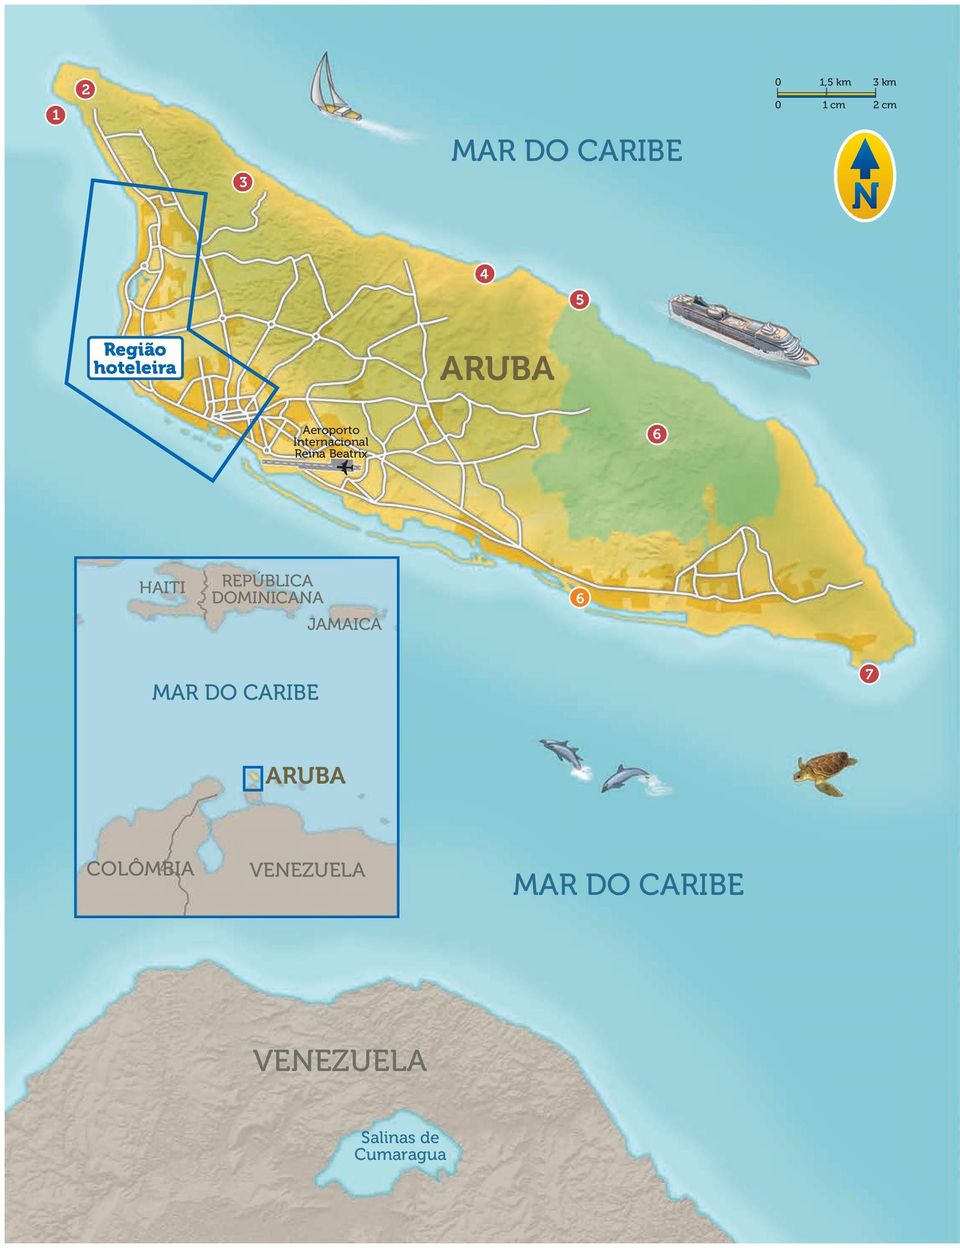 HAITI REPÚBLICA DOMINICANA JAMAICA 6 MAR DO CARIBE 7 ARUBA